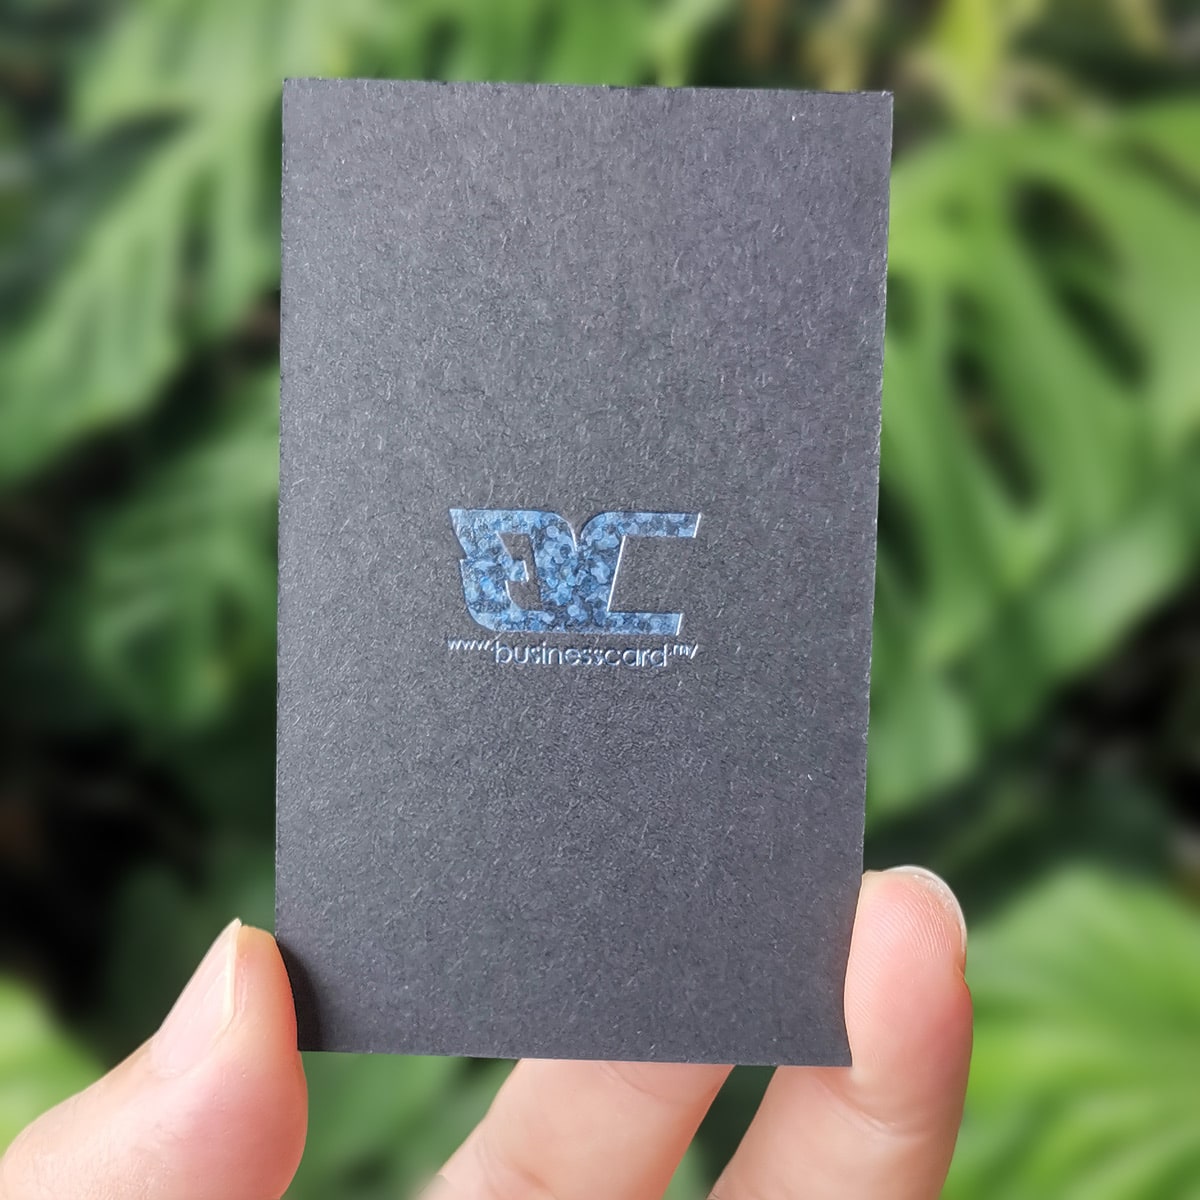 Black Business Cards with transparent pattern hologram foil stamping